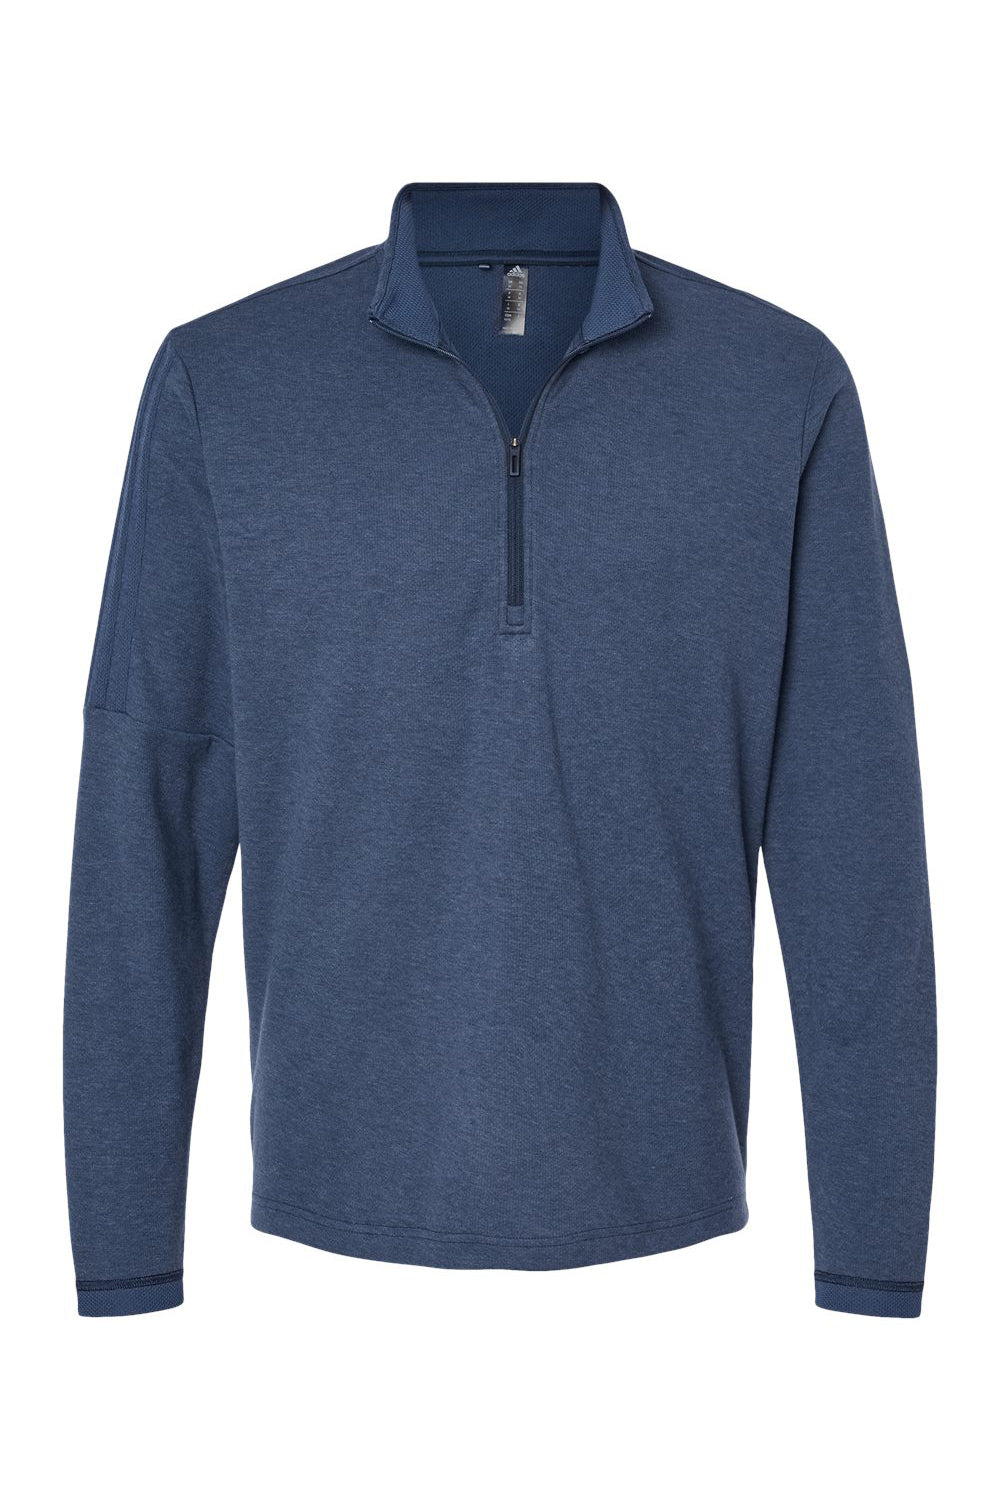 Adidas A554 Mens 3 Stripes Moisture Wicking 1/4 Zip Sweater Collegiate Navy Blue Melange Flat Front